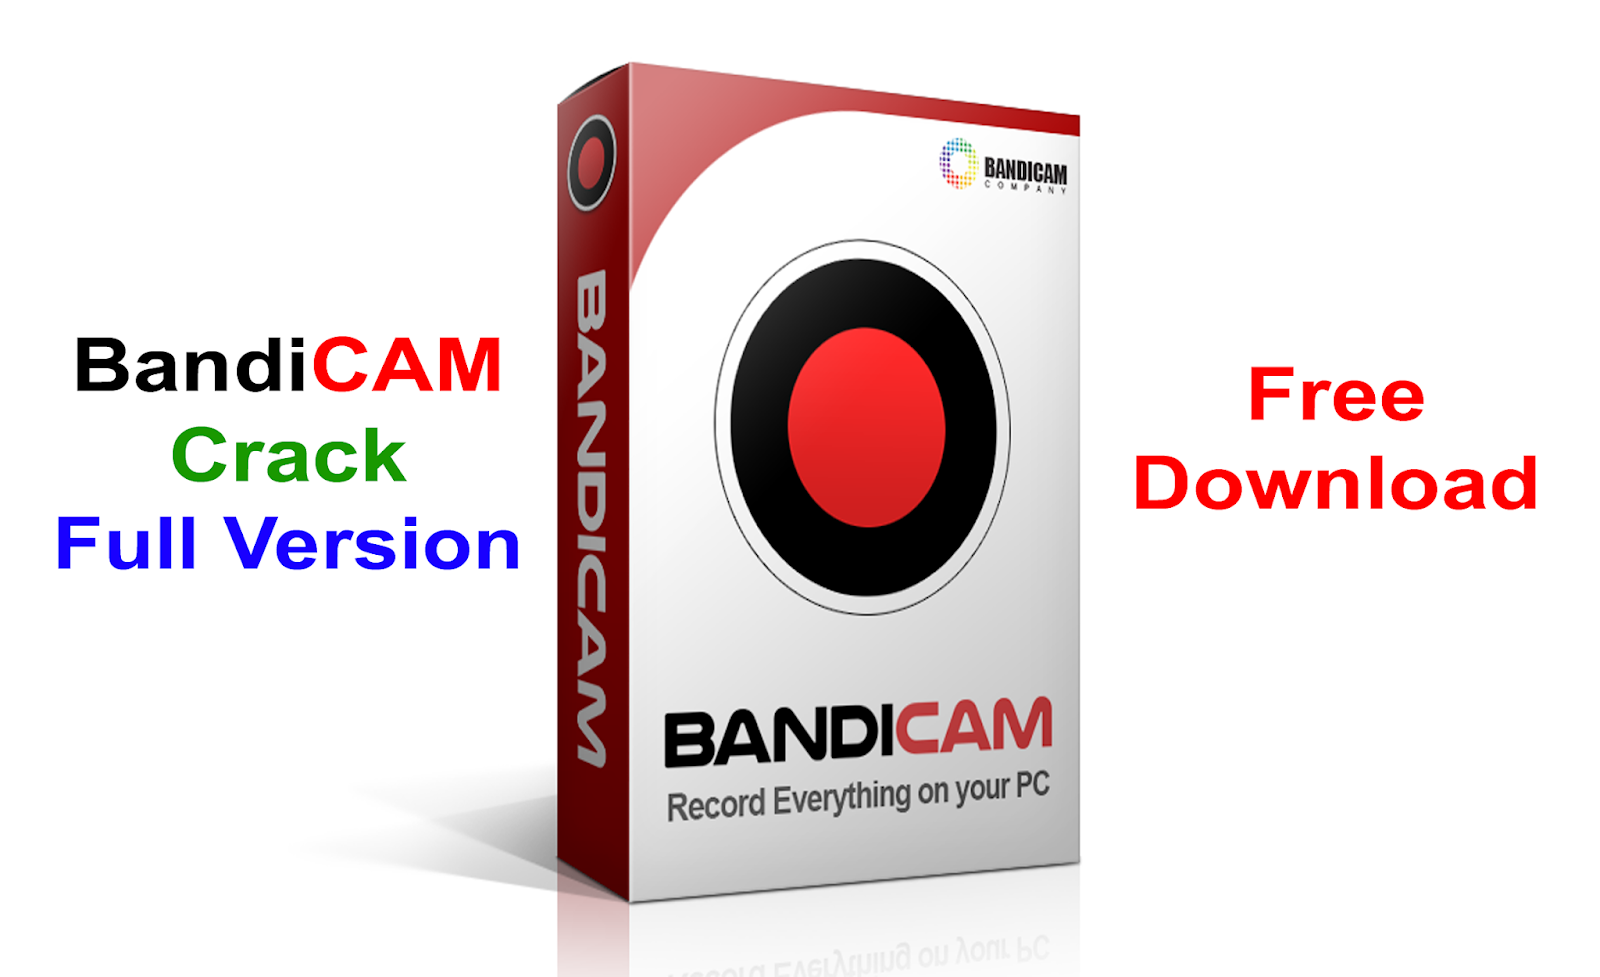 bandicam full version download mediafire